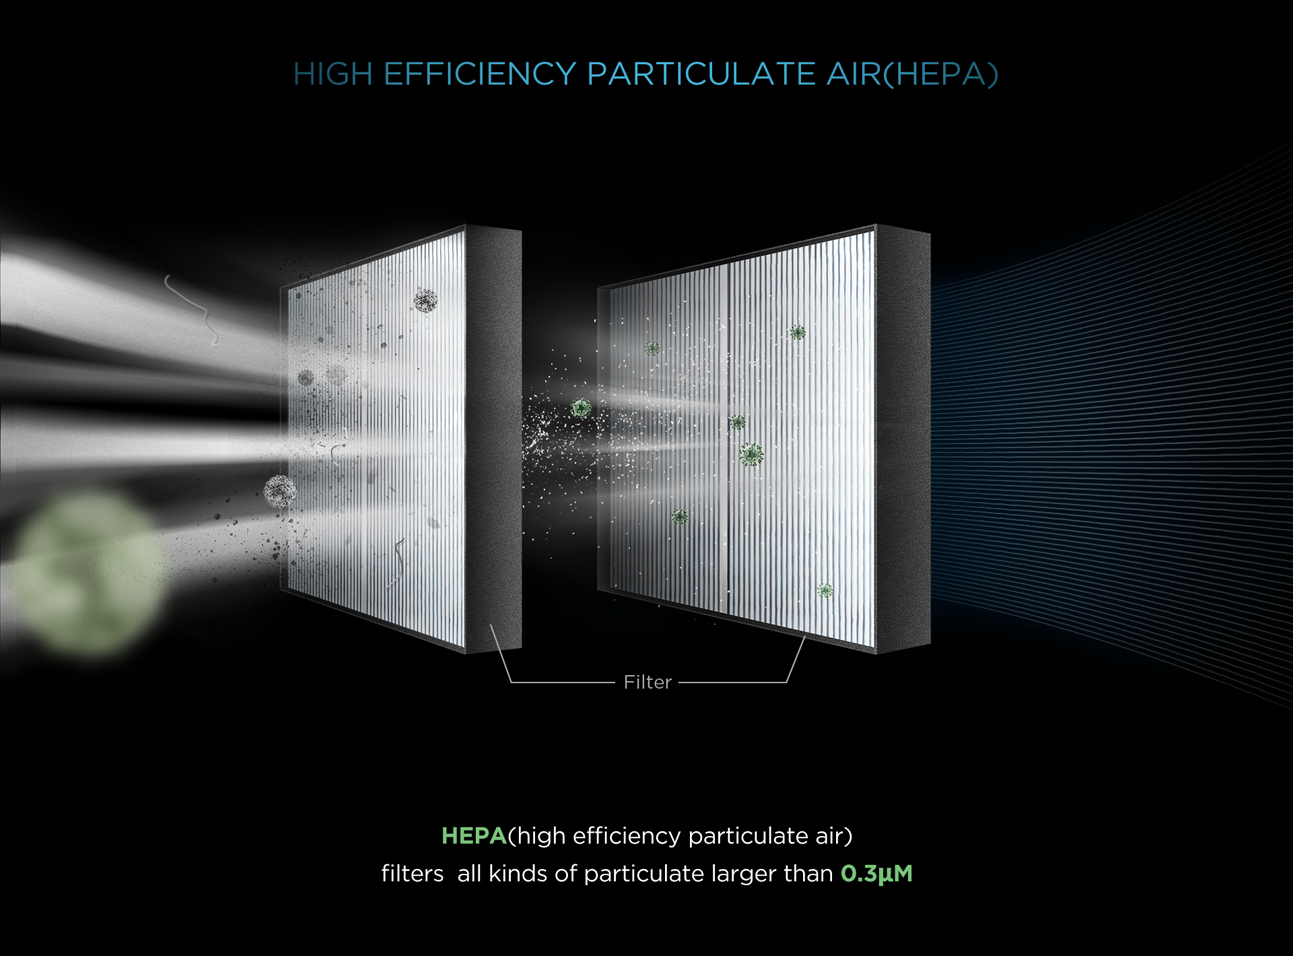 High Efficiency Particulate Air